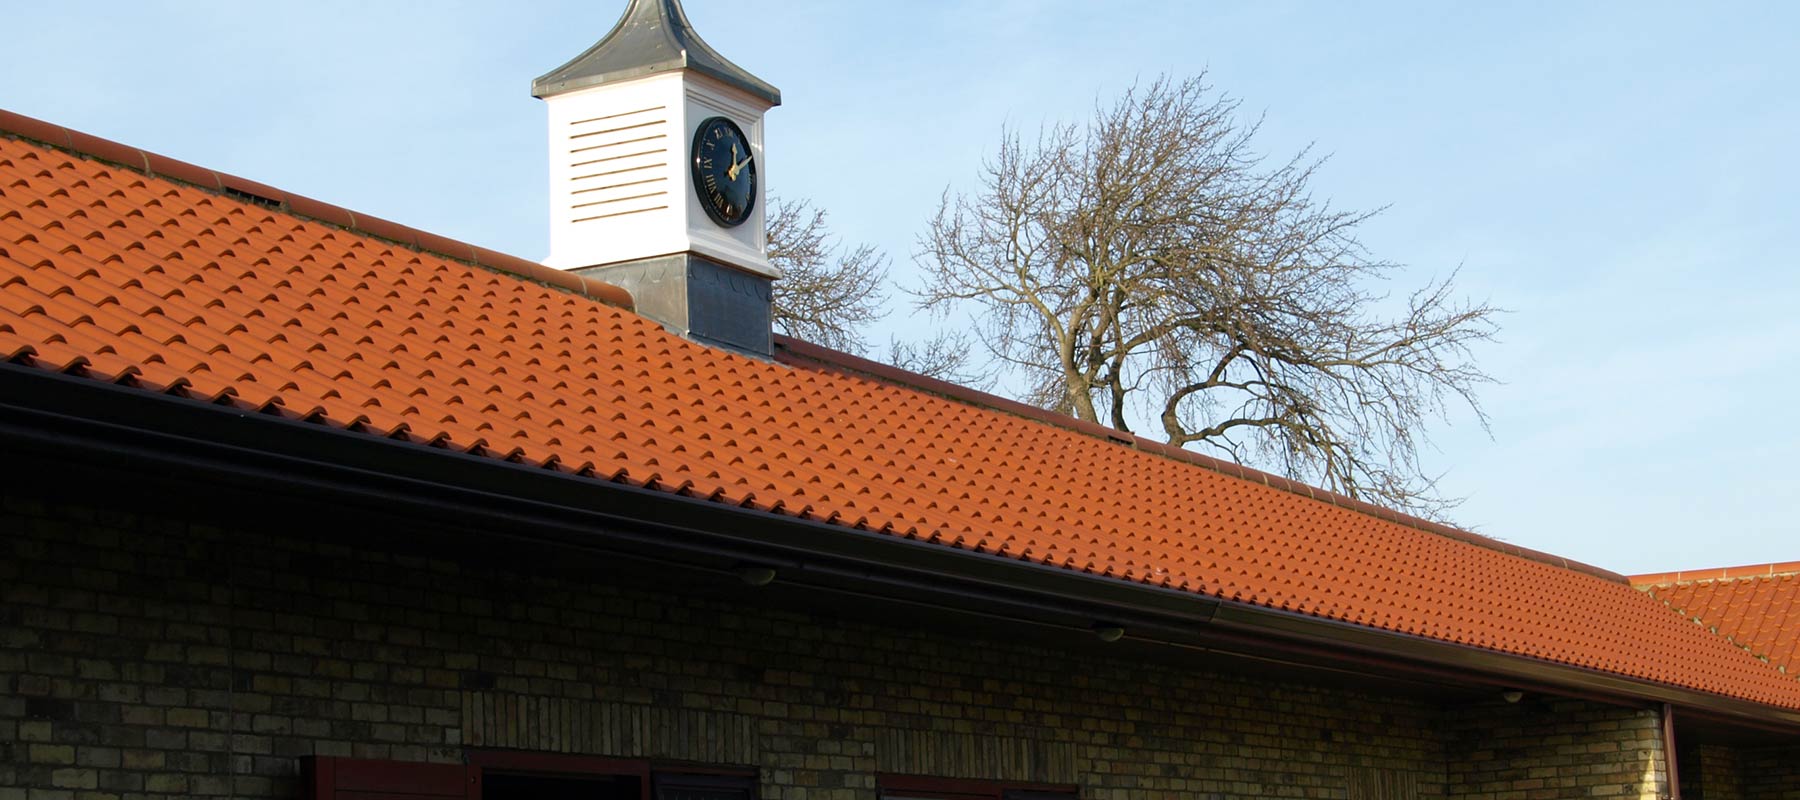 Paul Nunn Roofing Ltd-Roofing Contractors-Roof Repairs-Bury St Edmunds-Ipswich-Newmarket-Cambridge-Suffolk-Cambridgeshire